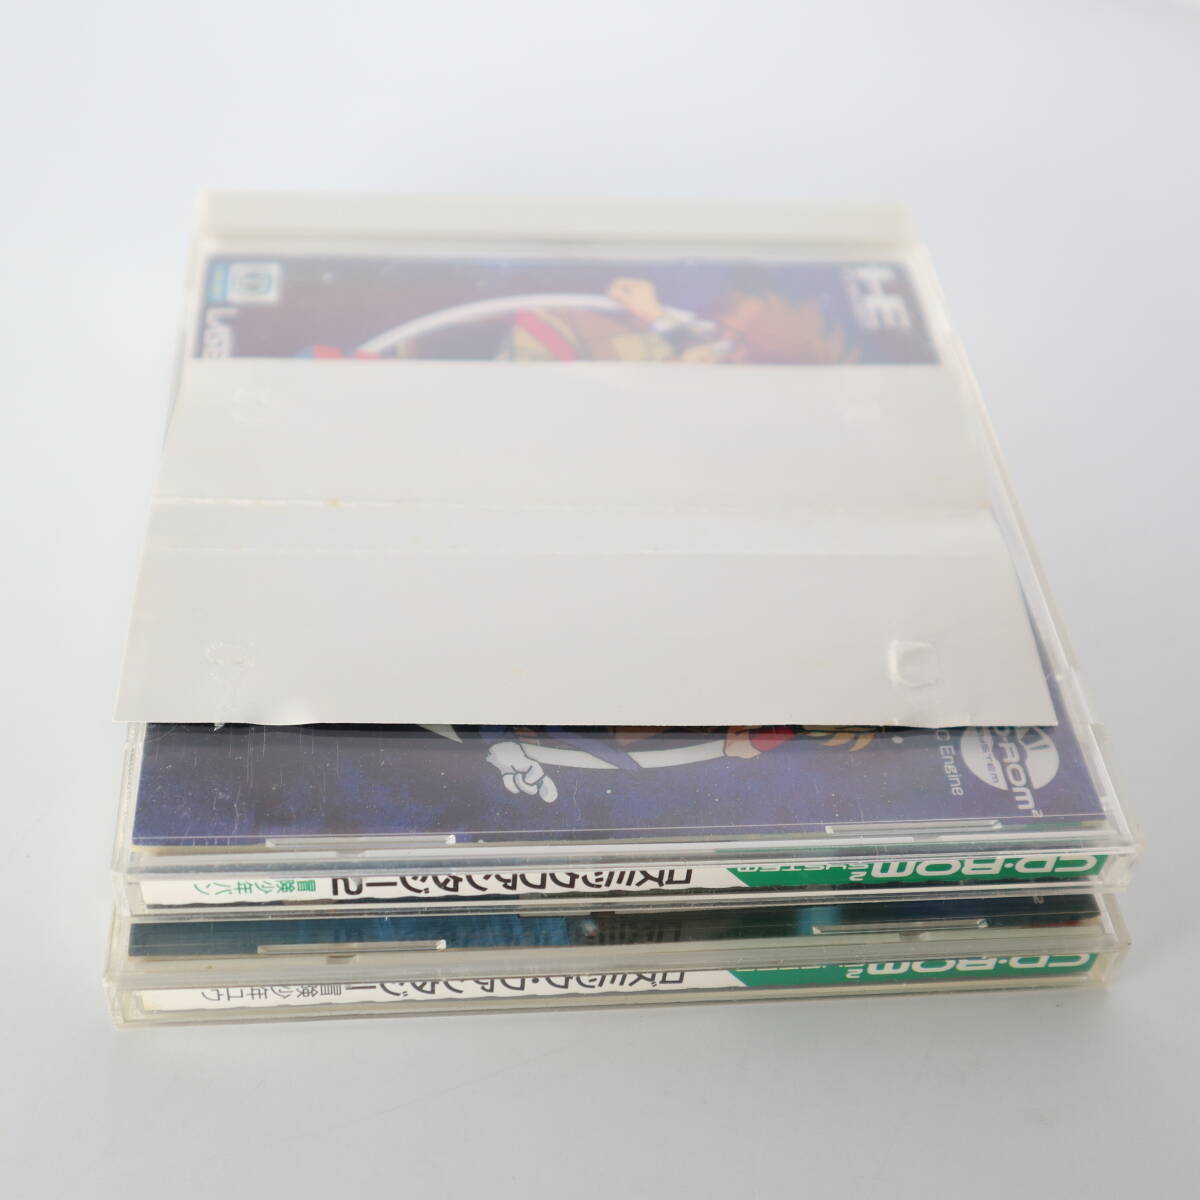 PCエンジン CD-ROM2 コズミックファンタジー 冒険少年ユウ / コズミックファンタジー 2 冒険少年バン 2本セット 日本テレネット 動作確認済の画像7